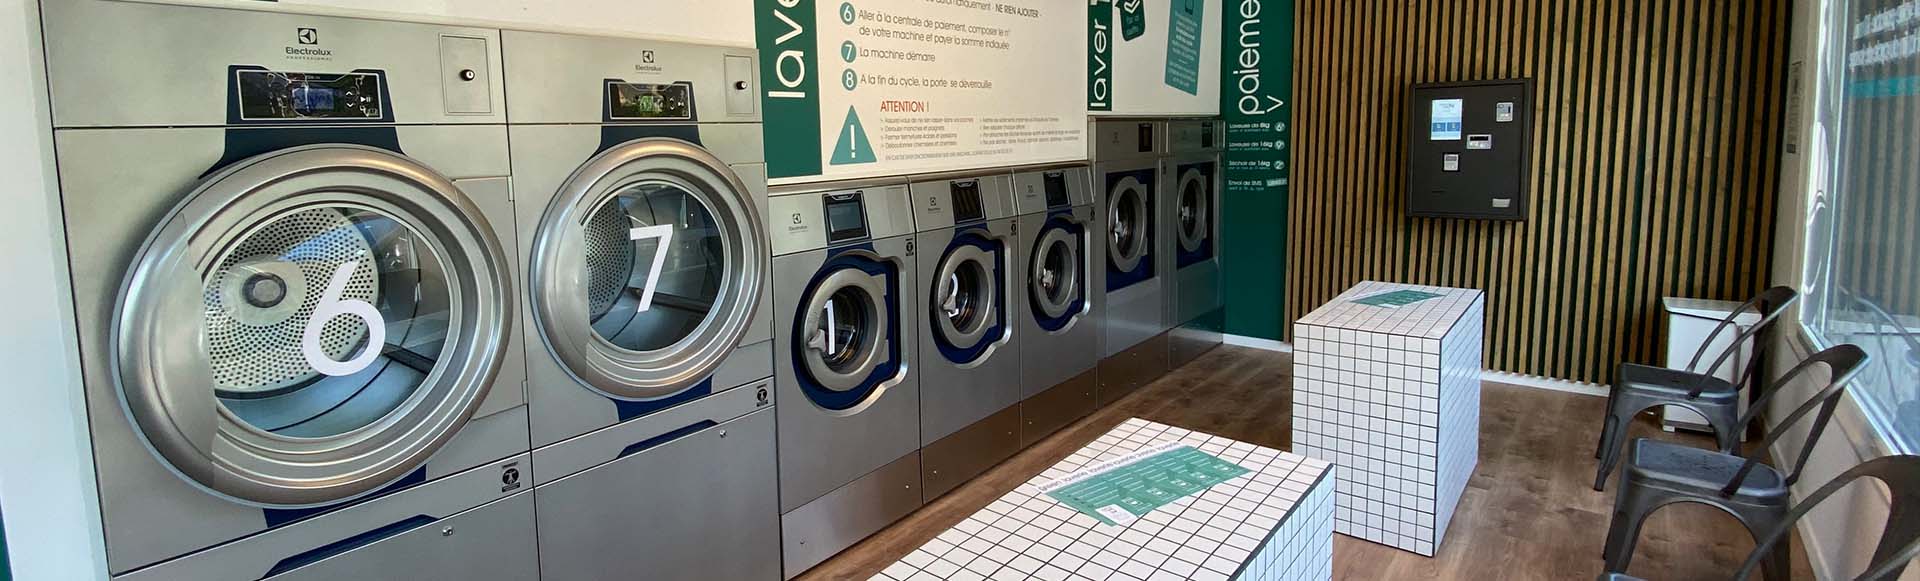 Laundromat Equipment - Coin Laundry Machines